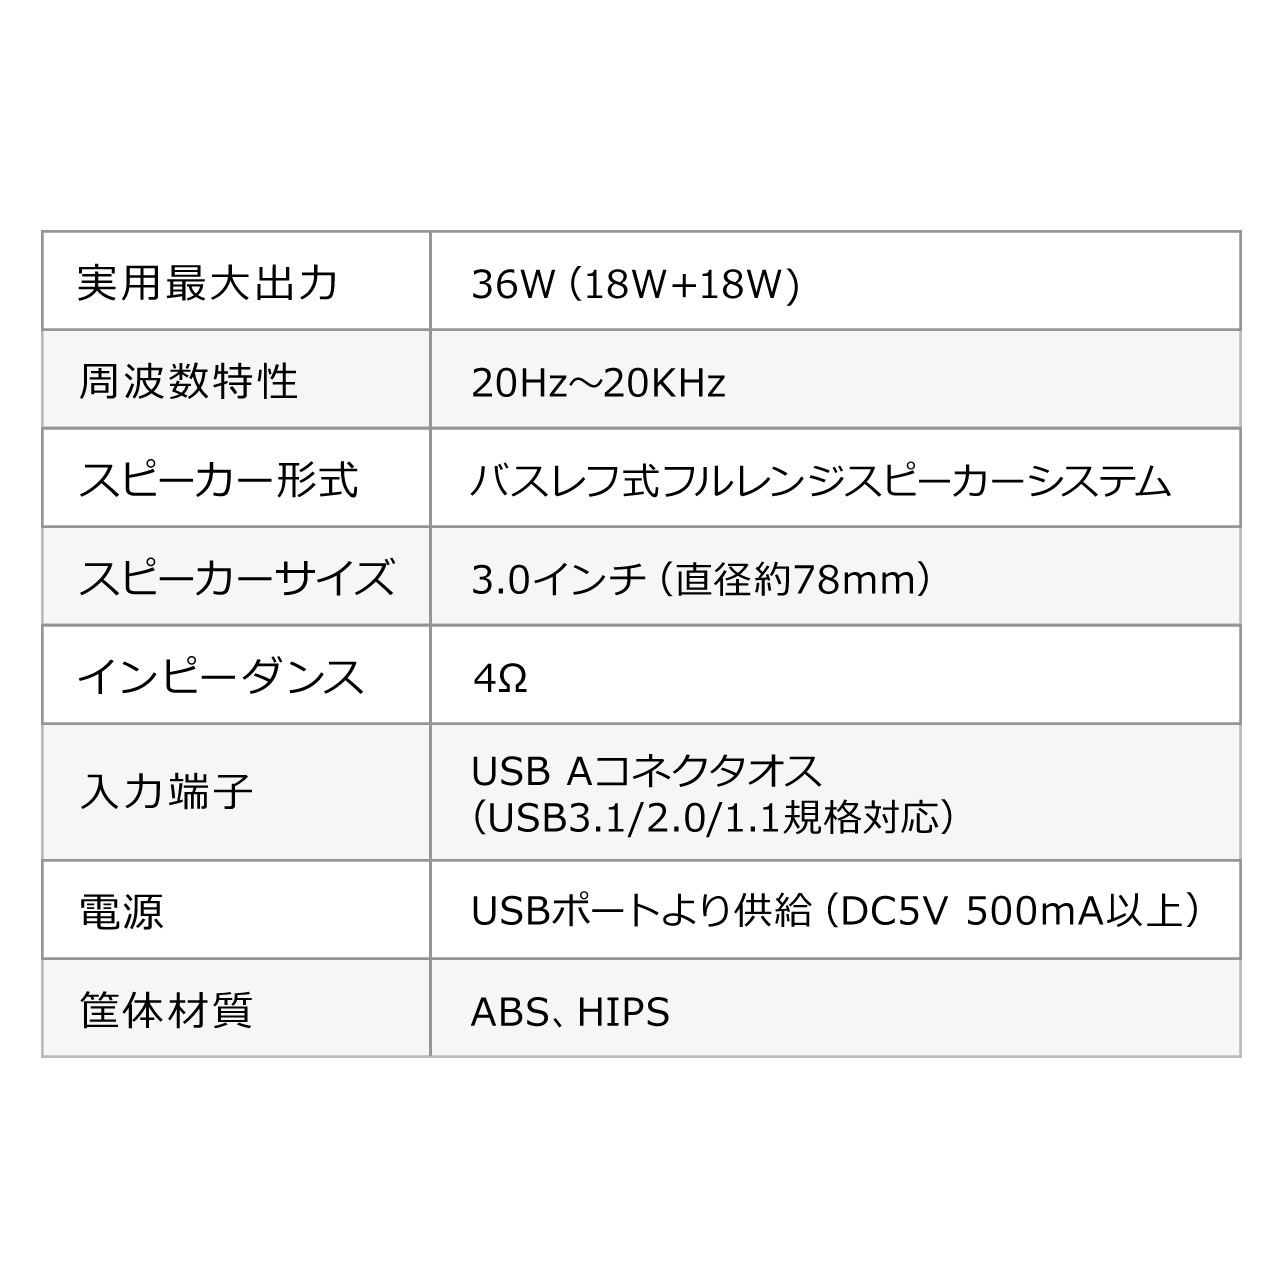 USBd AvXs[J[ 36Wo nCp[ PCXs[J[ 400-SP082